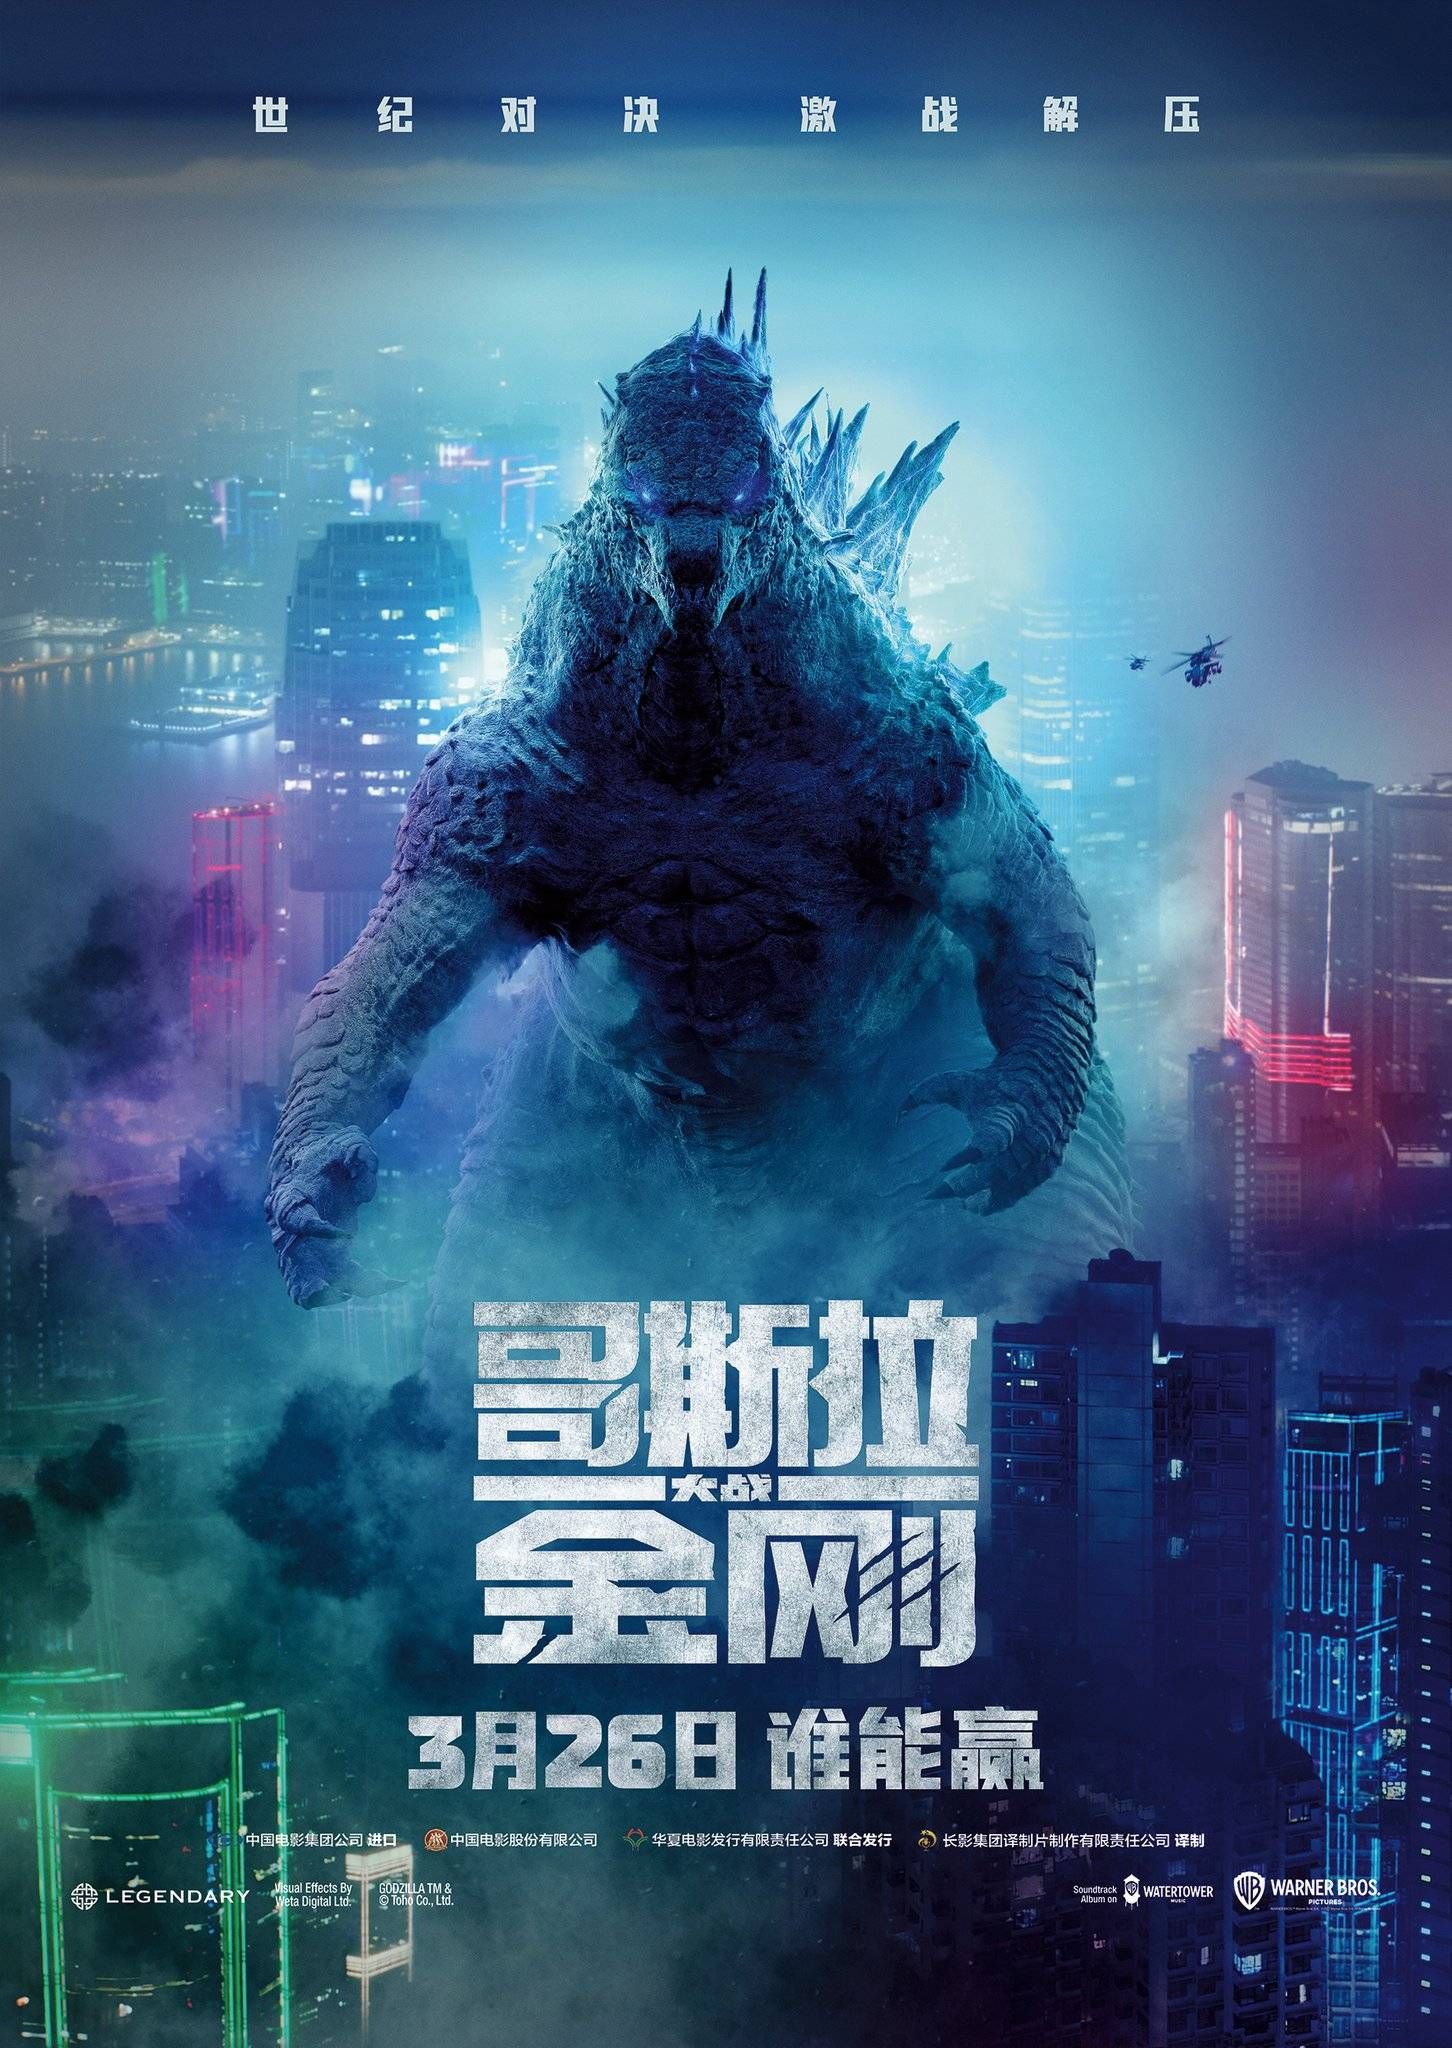 Godzilla vs. Kong gets two new Chinese posters